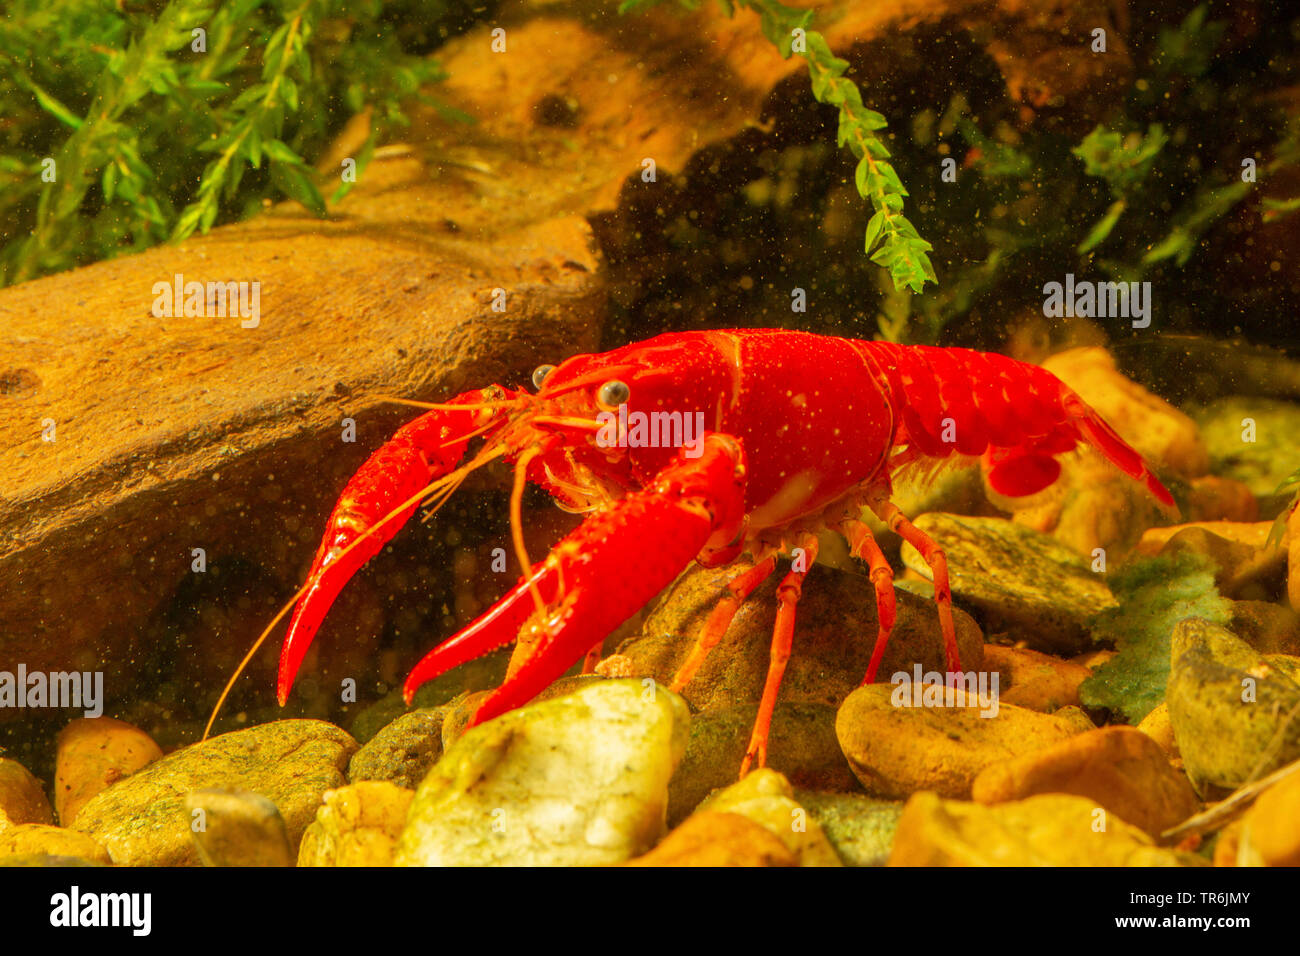 Louisiana red crayfish, red swamp crayfish, Louisiana swamp crayfish, red crayfish (Procambarus clarkii), female, Germany Stock Photo